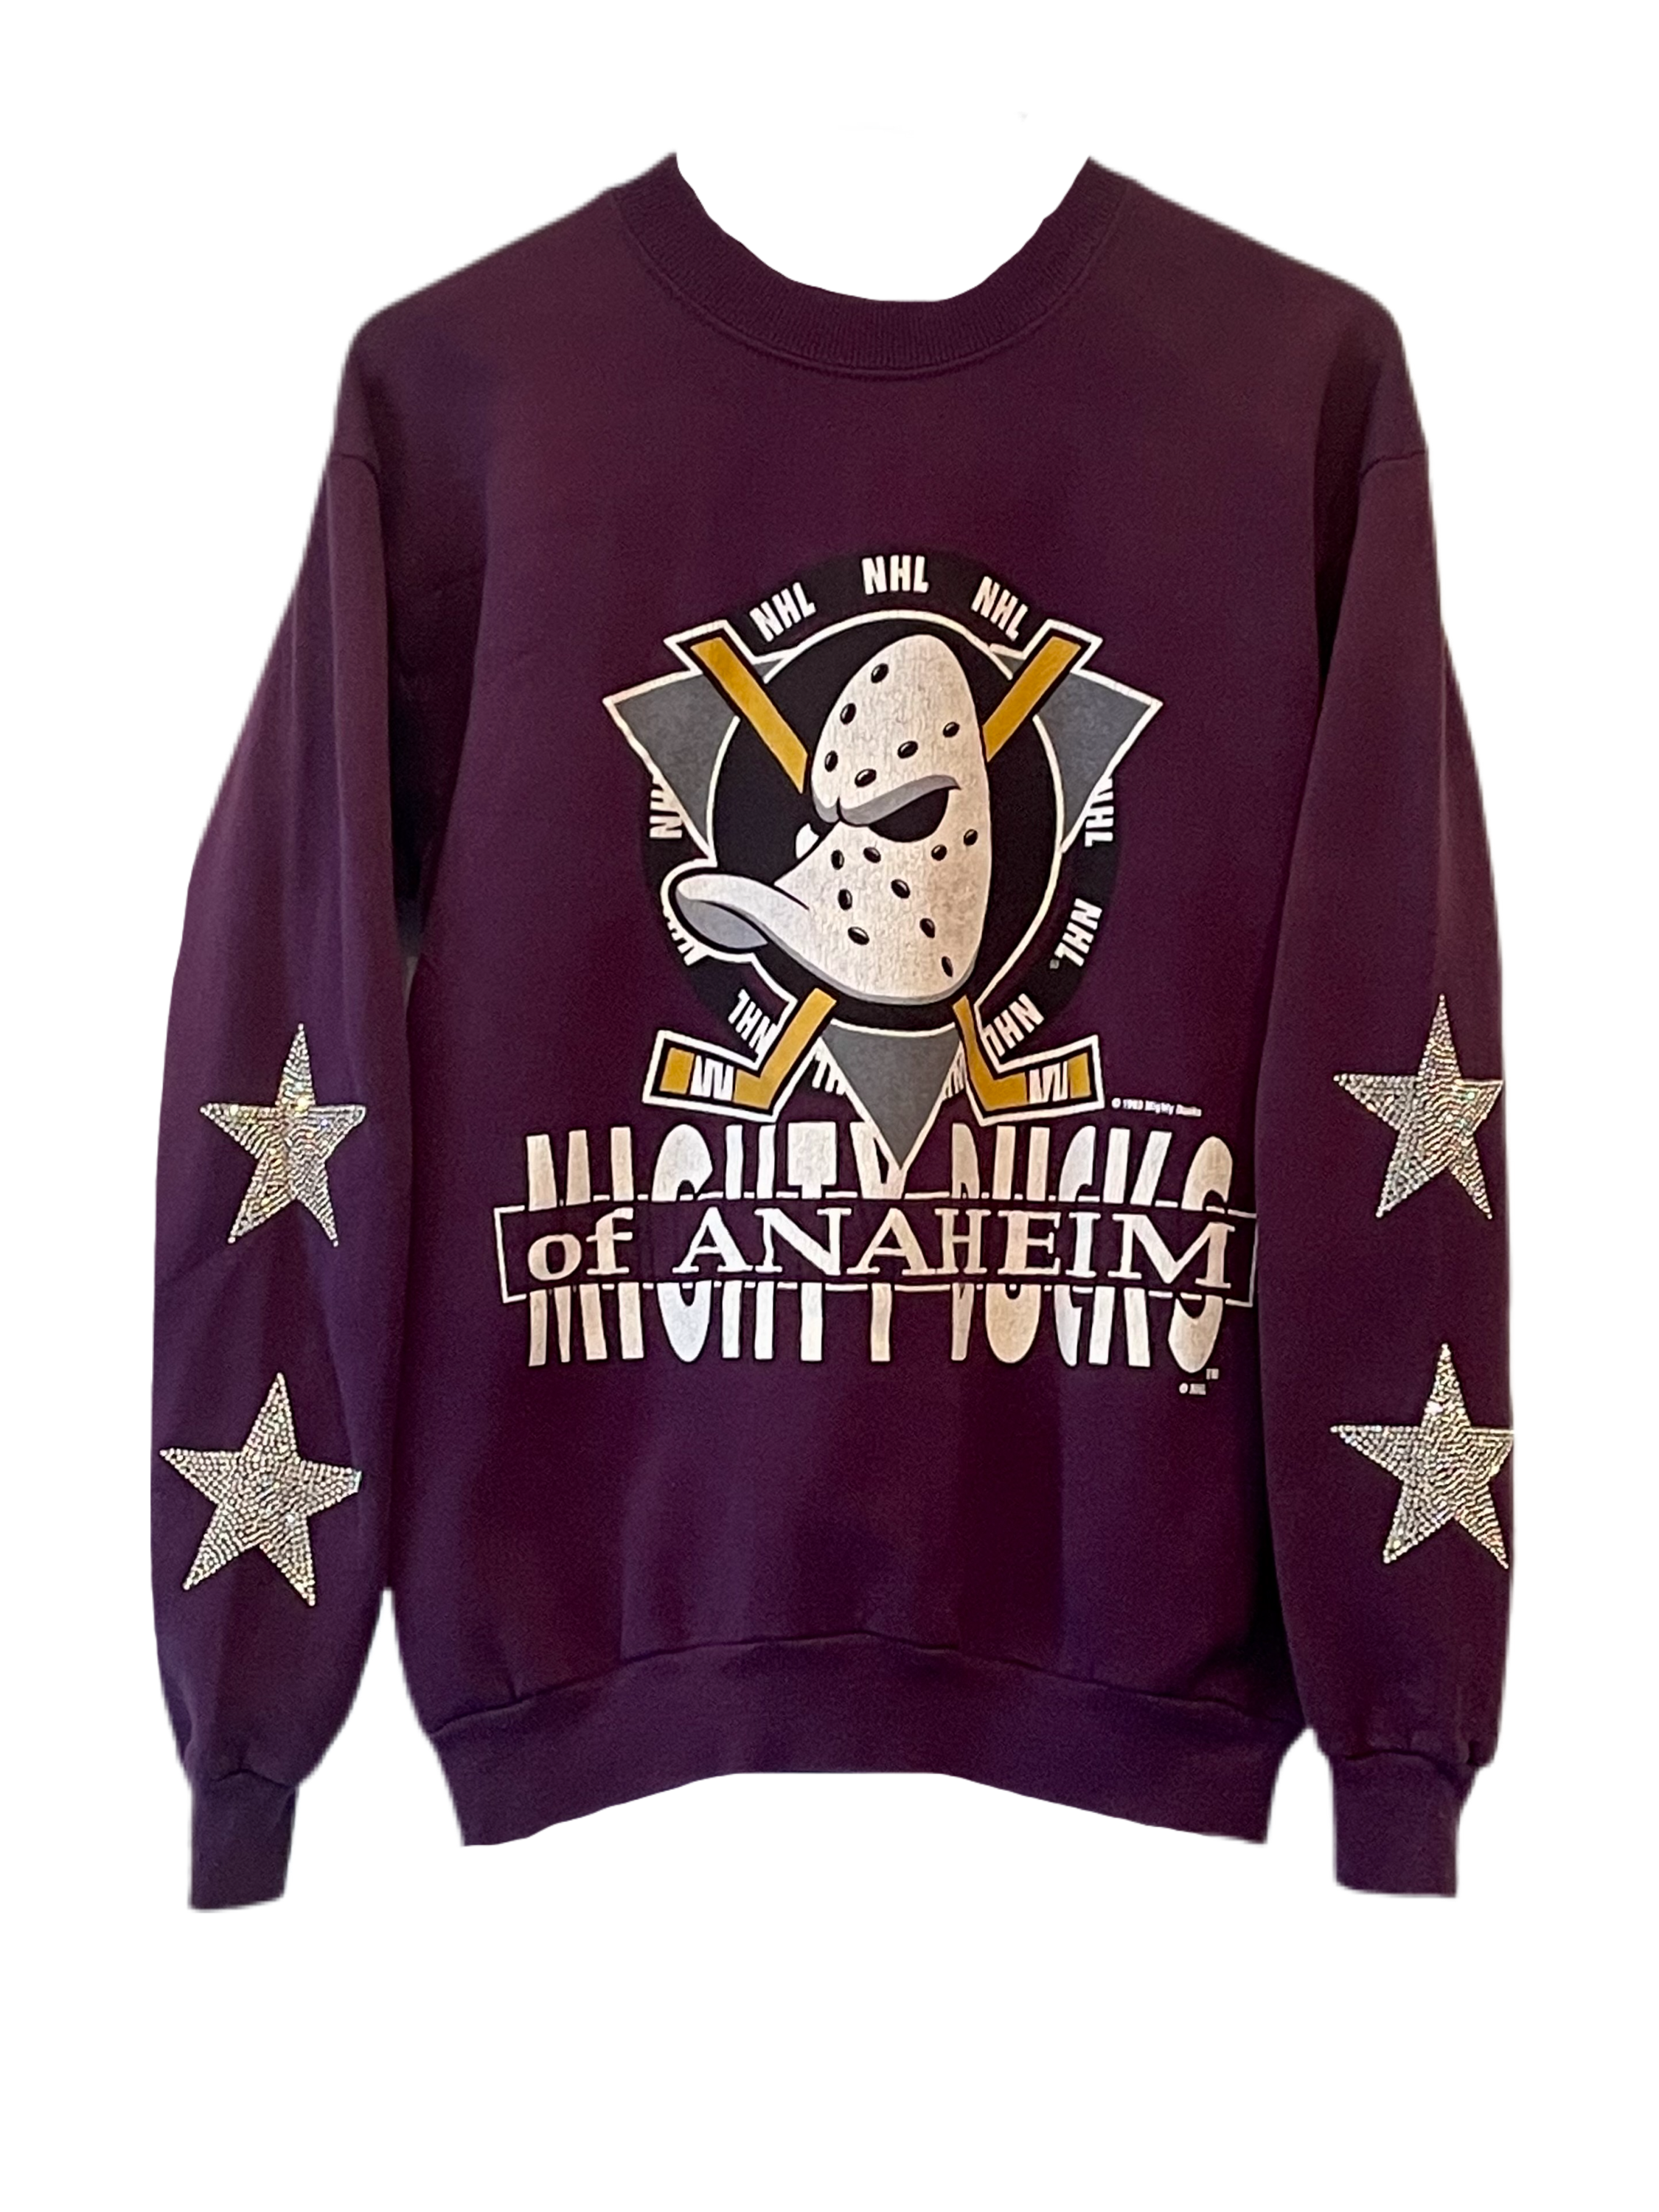 Rare! Anaheim Mighty Ducks Adidas MIC Pro Stock Hockey Wild Wing 25th Anniv  Jersey Size 50